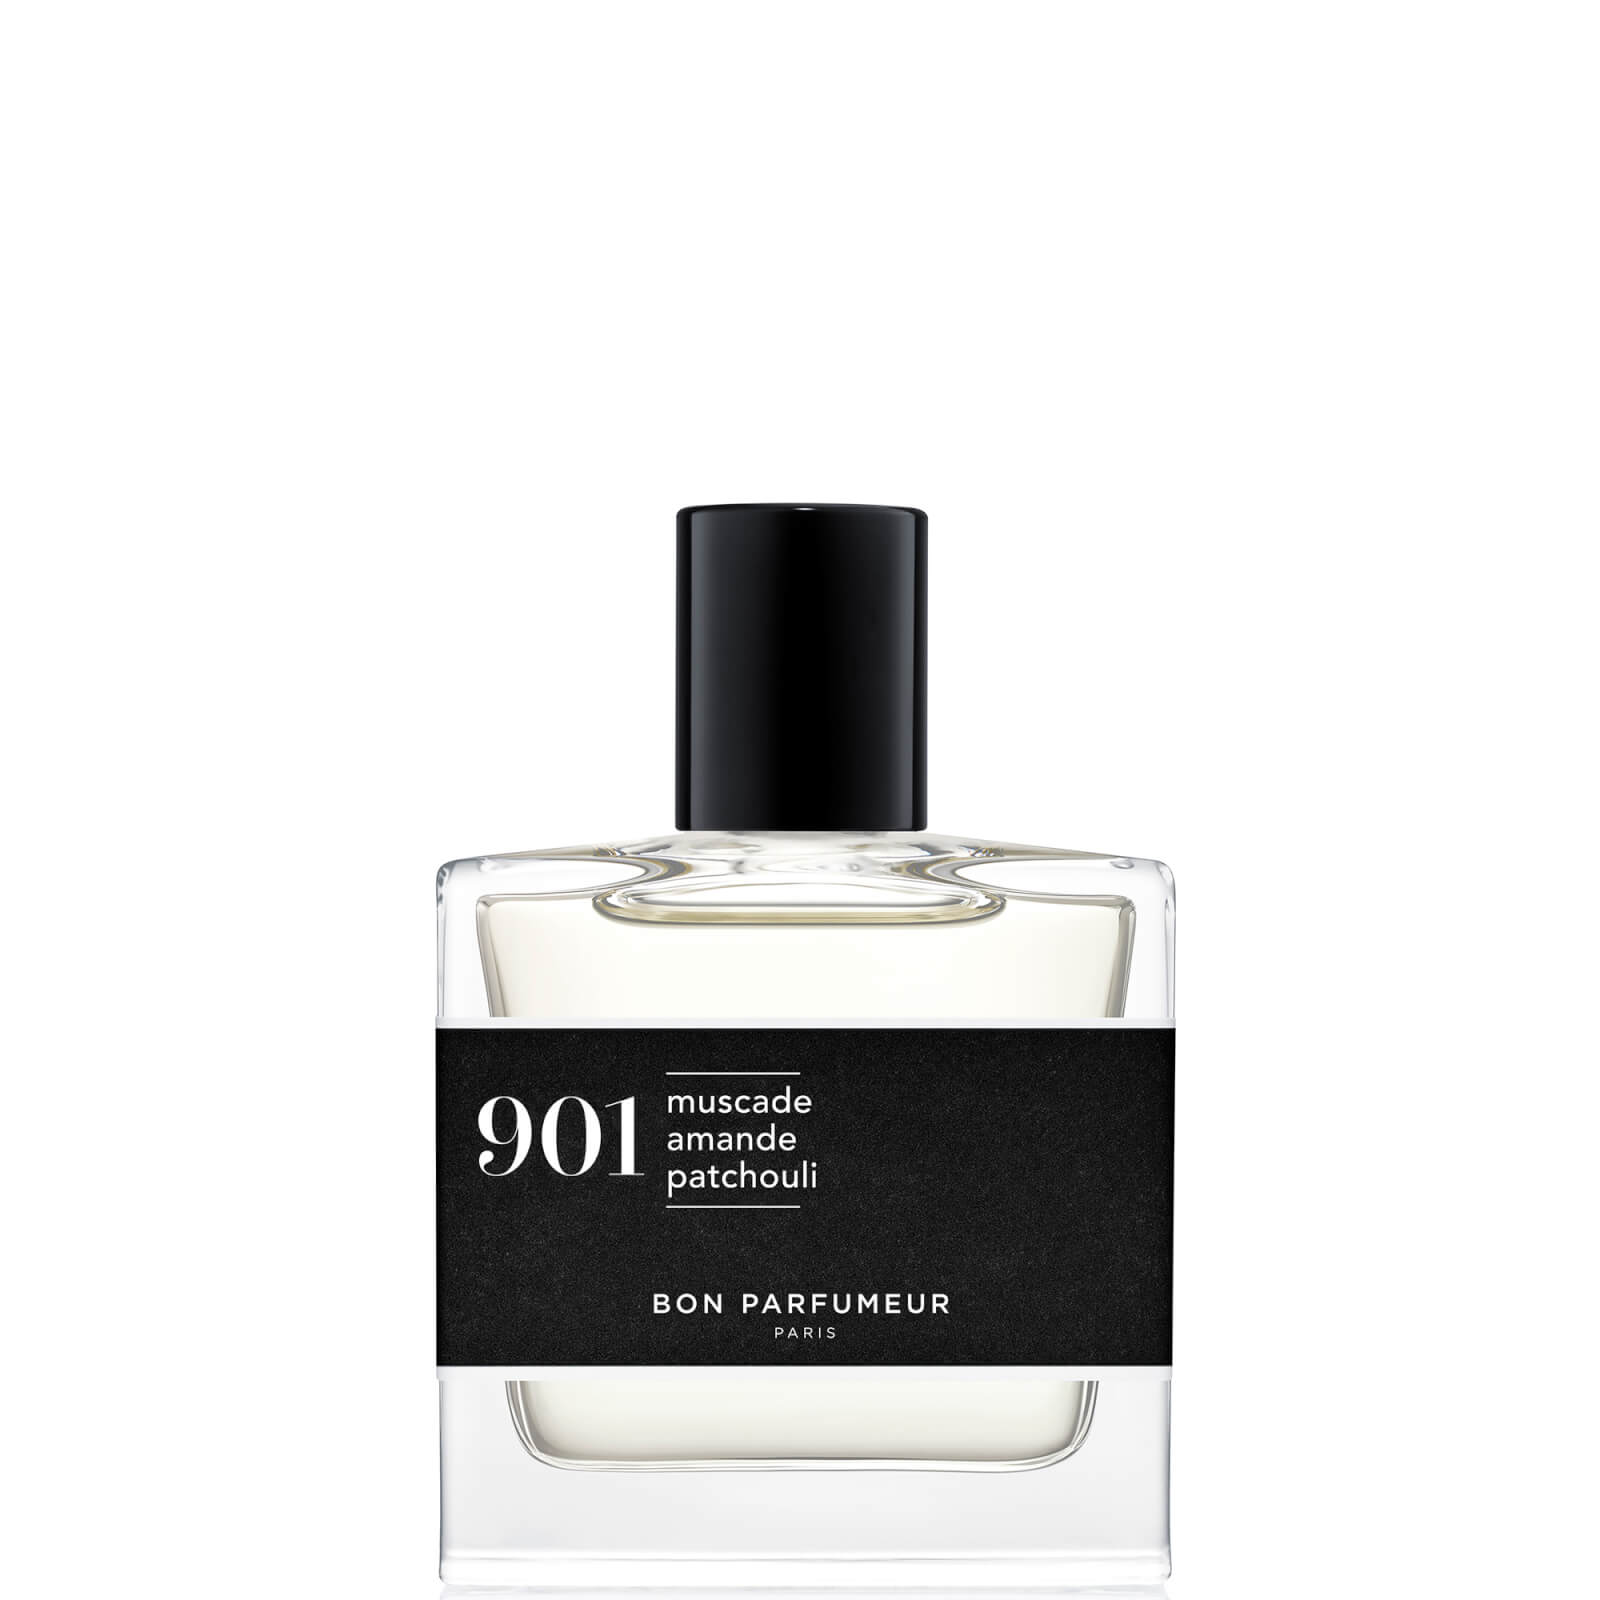 Image of Bon Parfumeur 901 Noce Moscata Mandorla Patchouli Eau de Parfum Profumo - 30ml